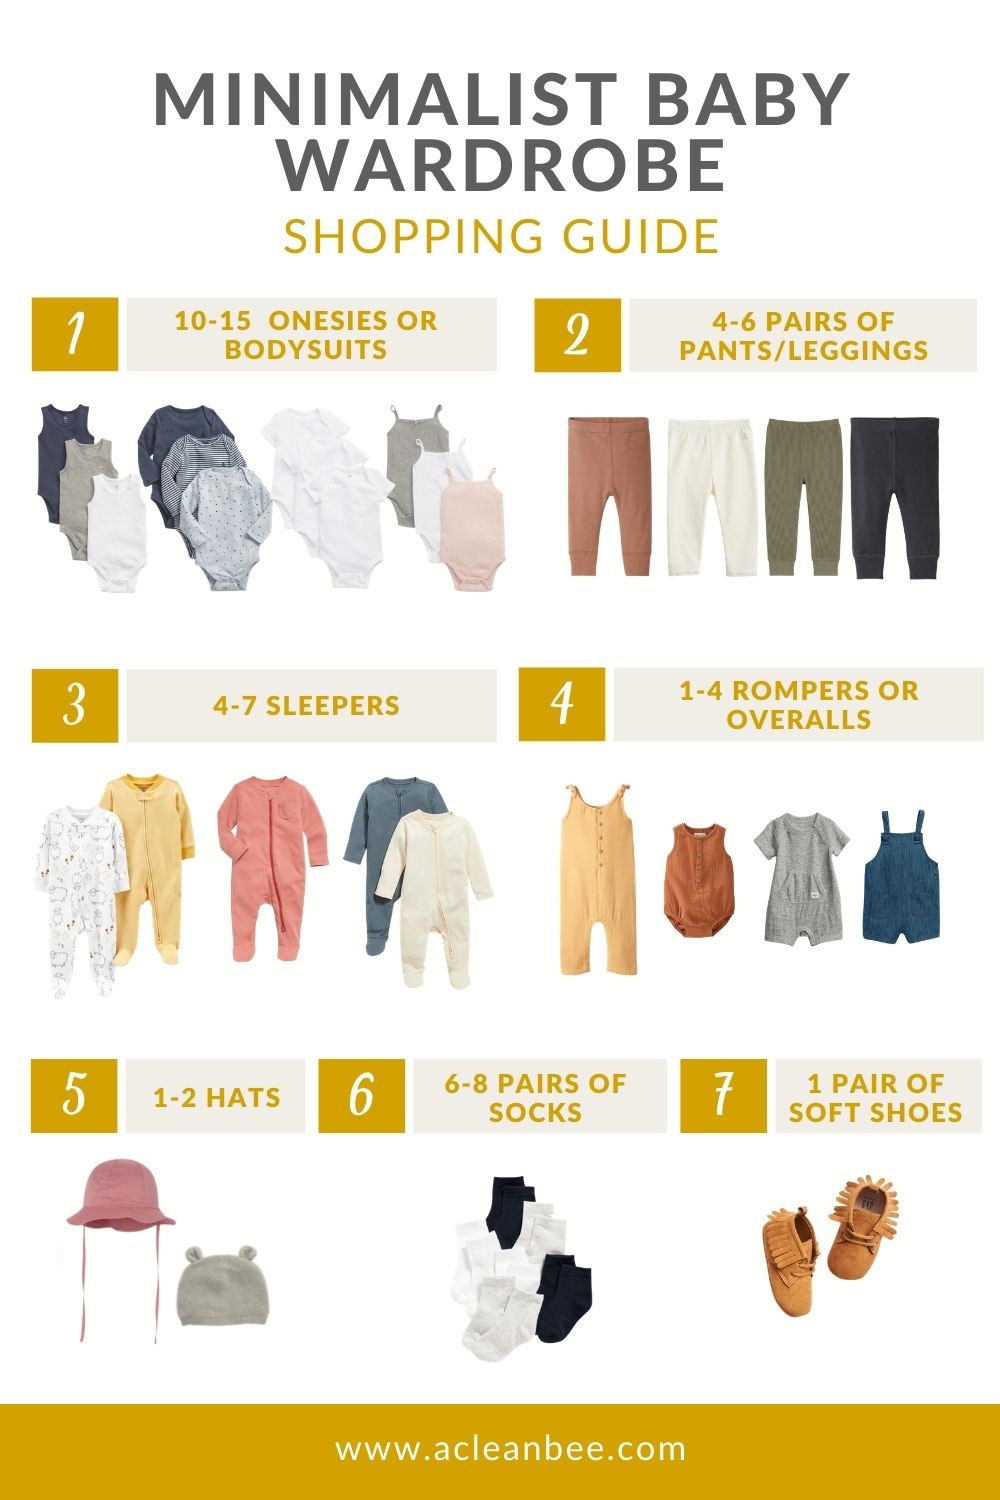 III. Choosing the Right Fabrics for Minimalist Baby Clothing